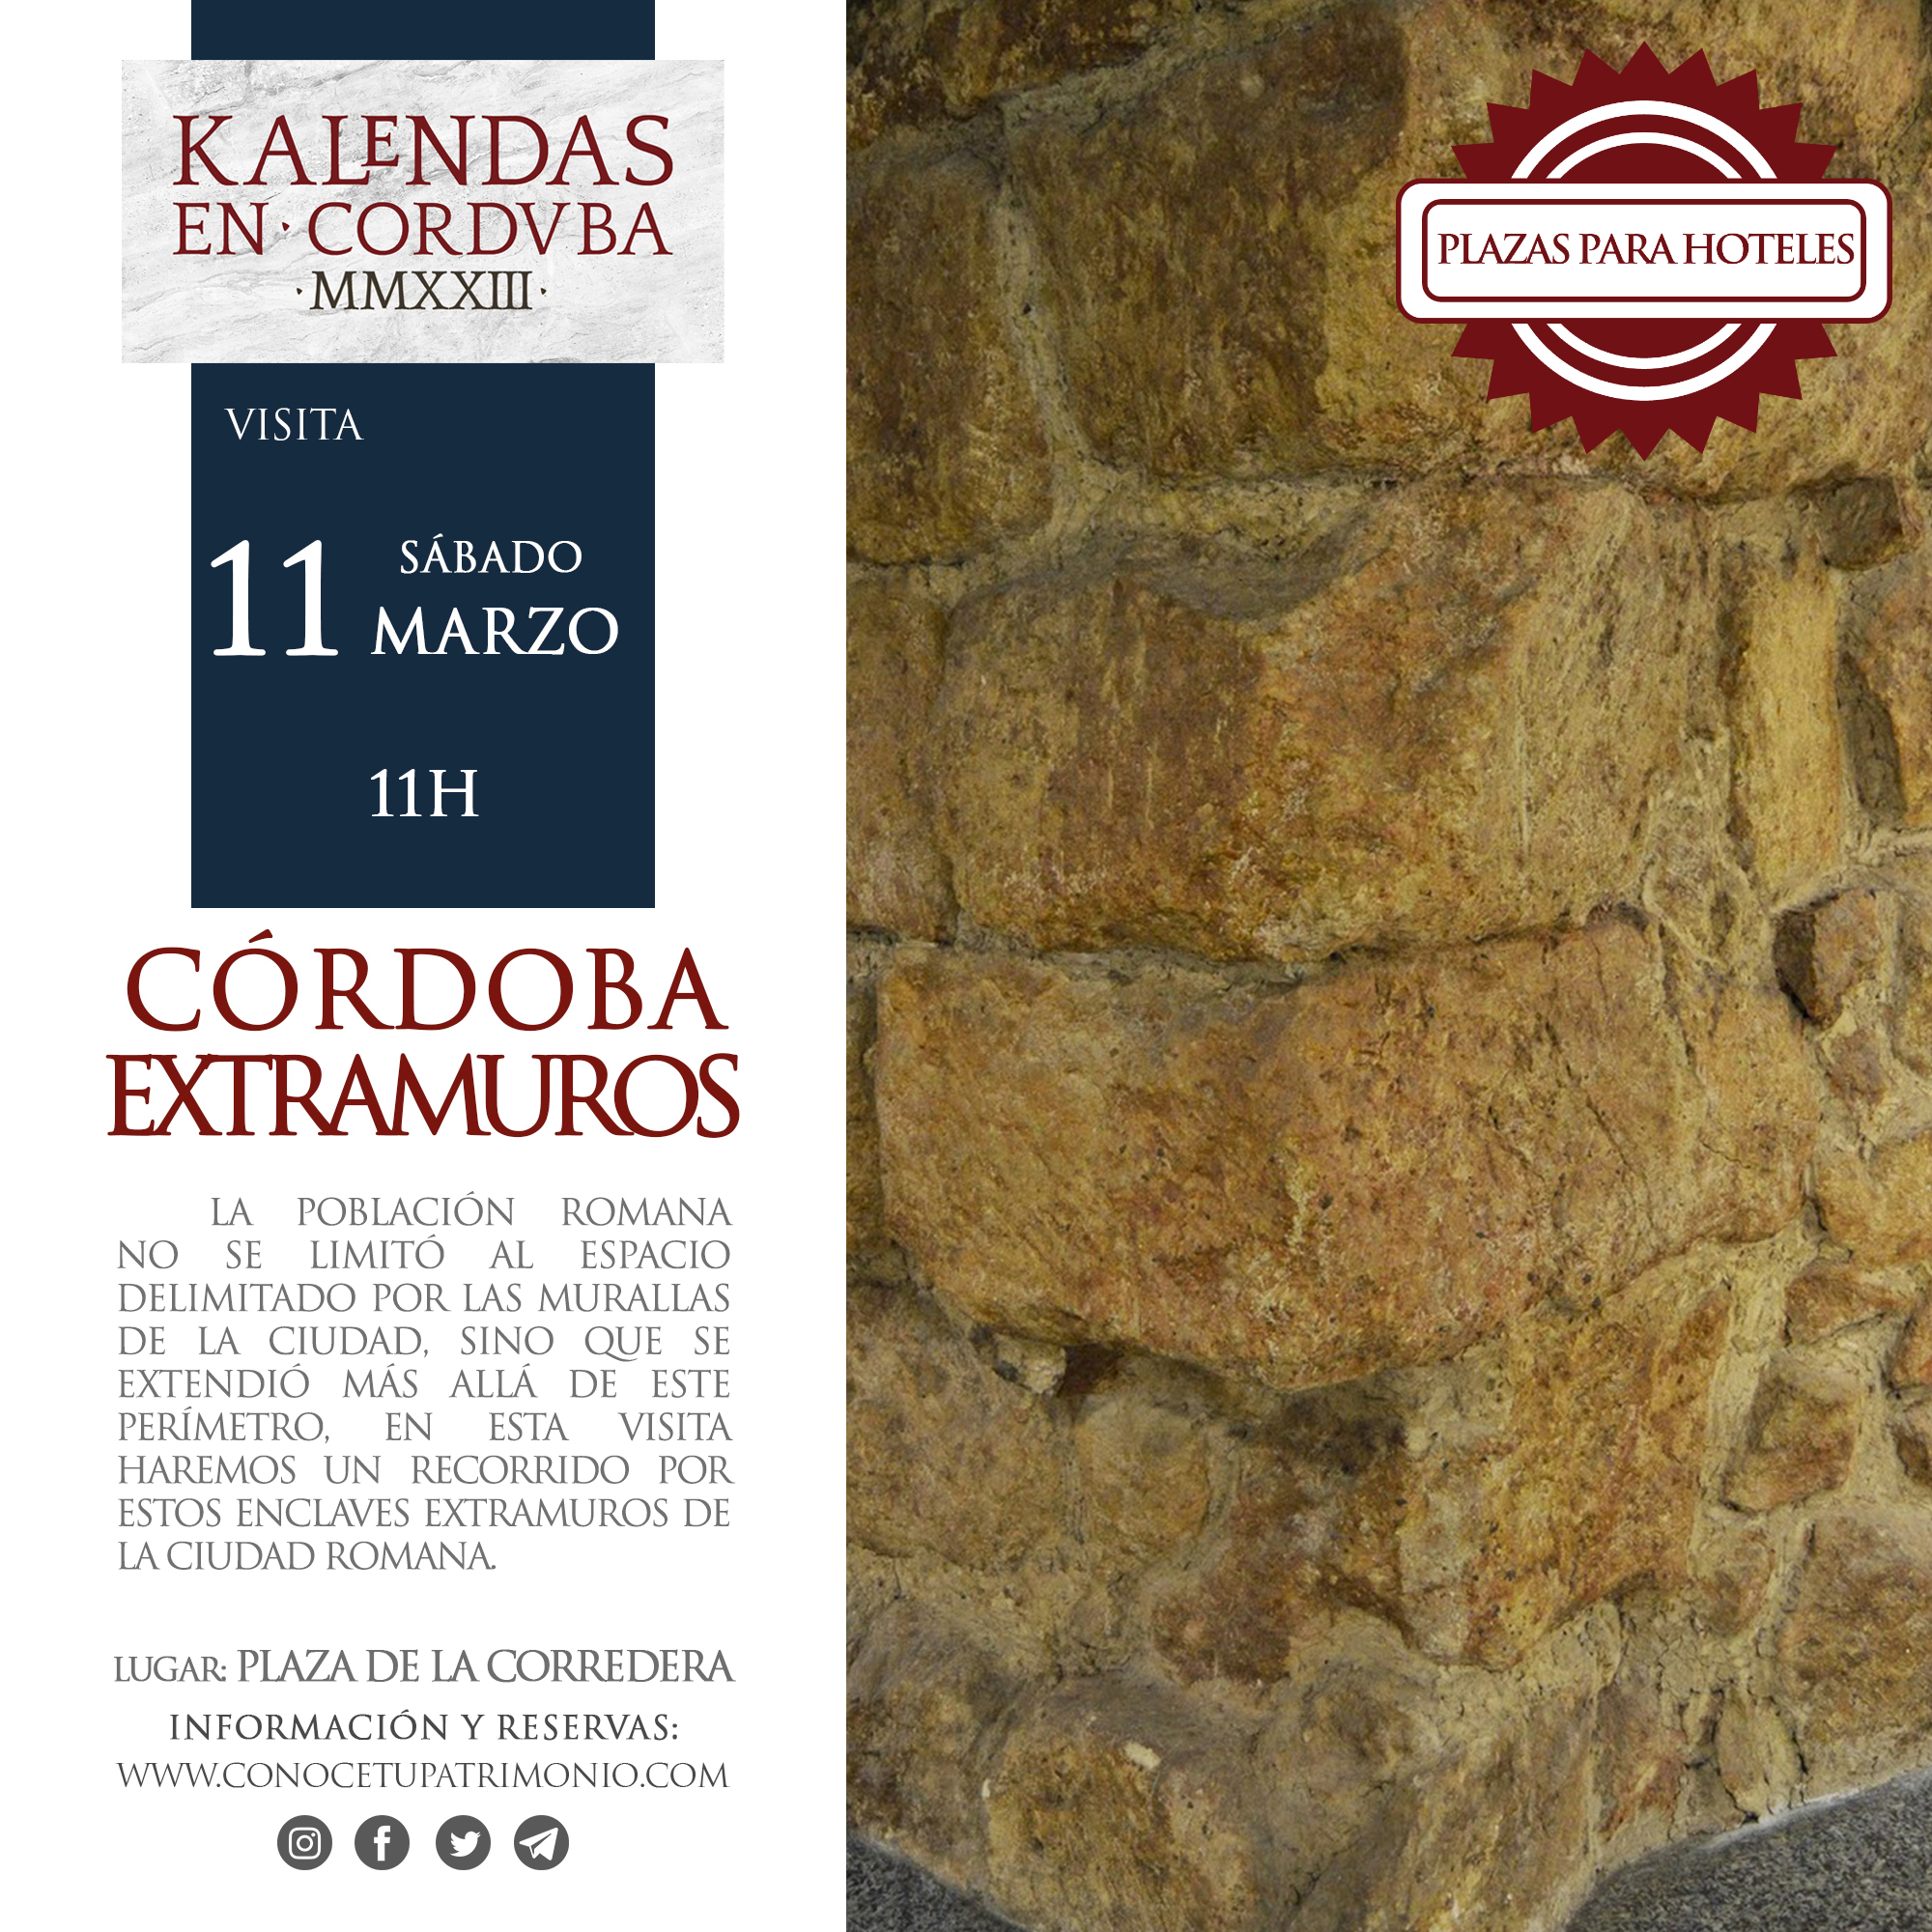 Hotel - Visita - Córdoba extramuros - 11 Marzo - 11 h.